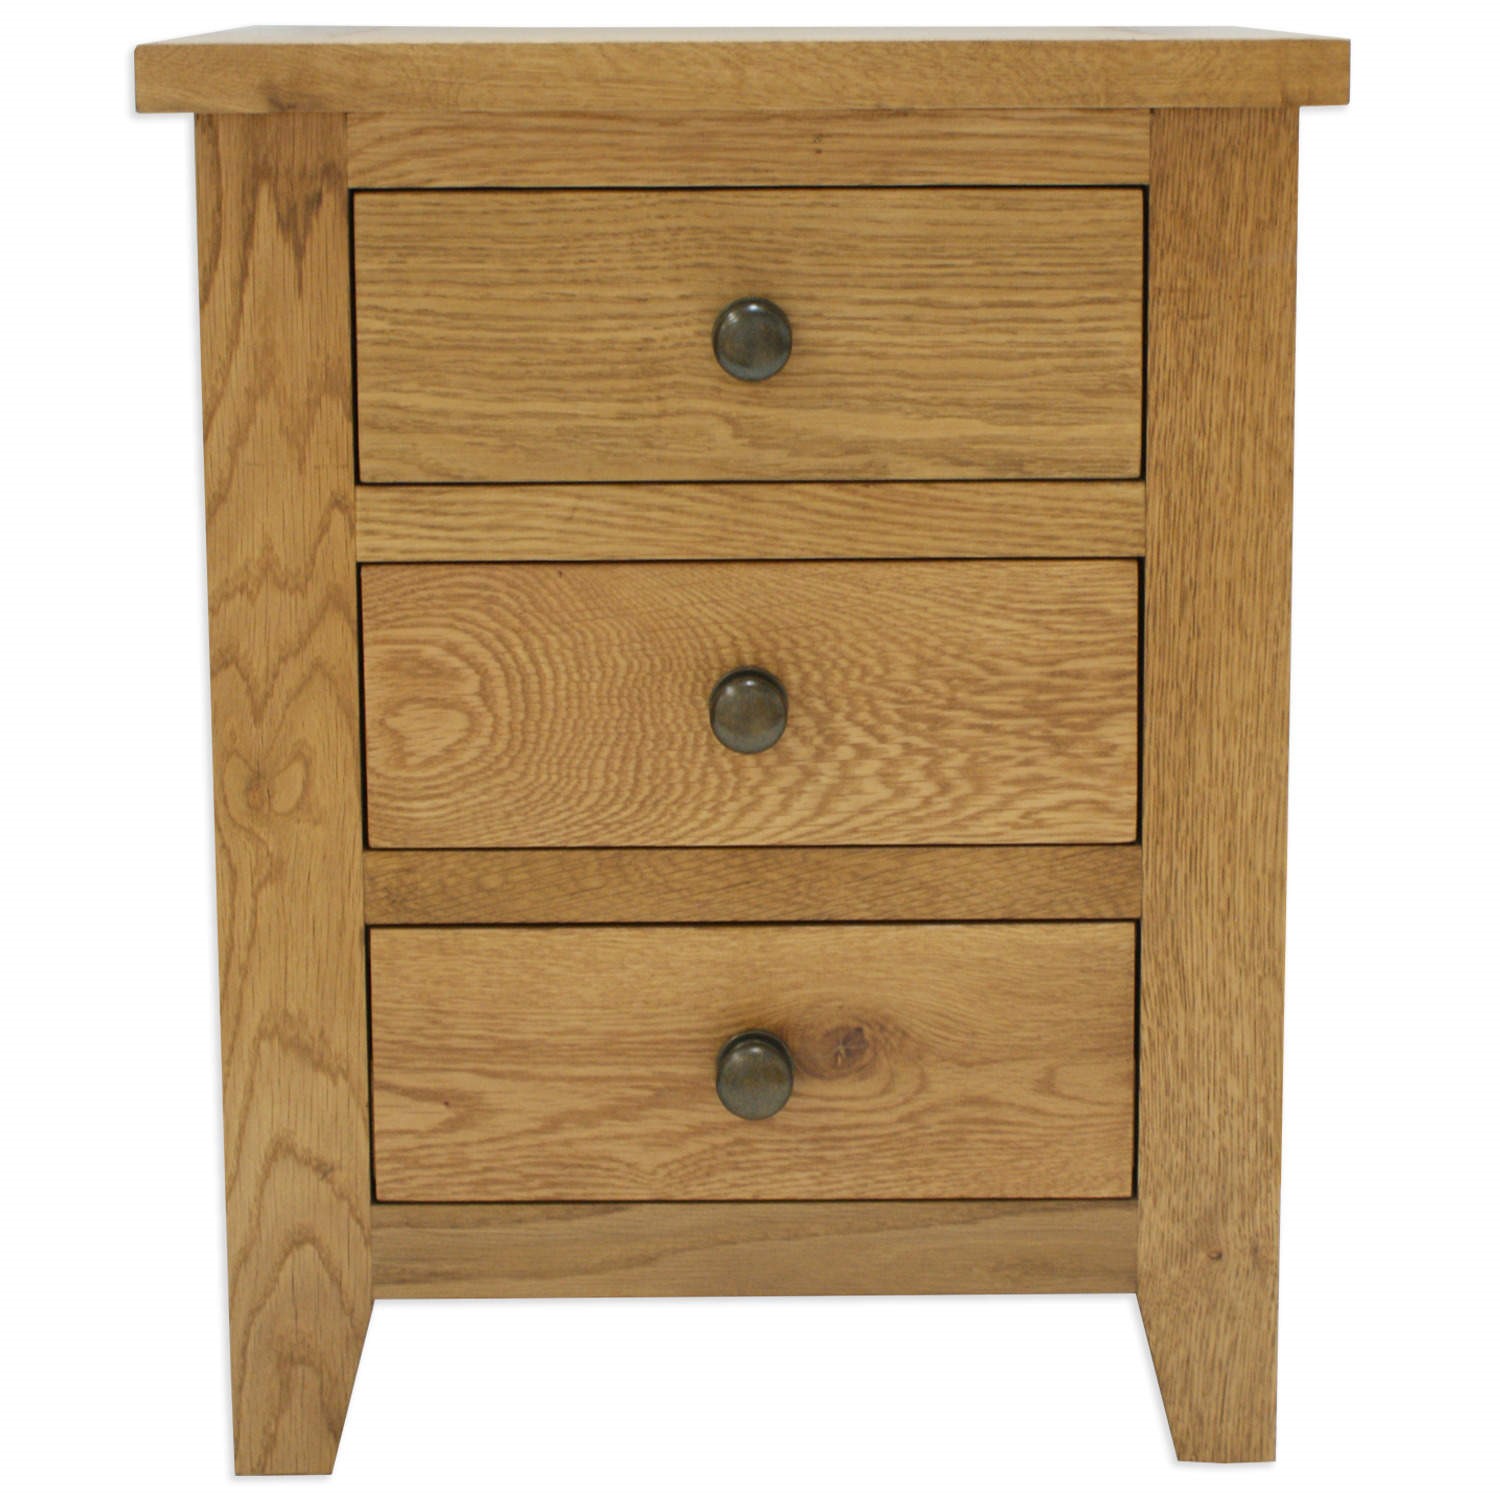 Photo of Solid oak 3 drawer bedside table - marlborough - julian bowen